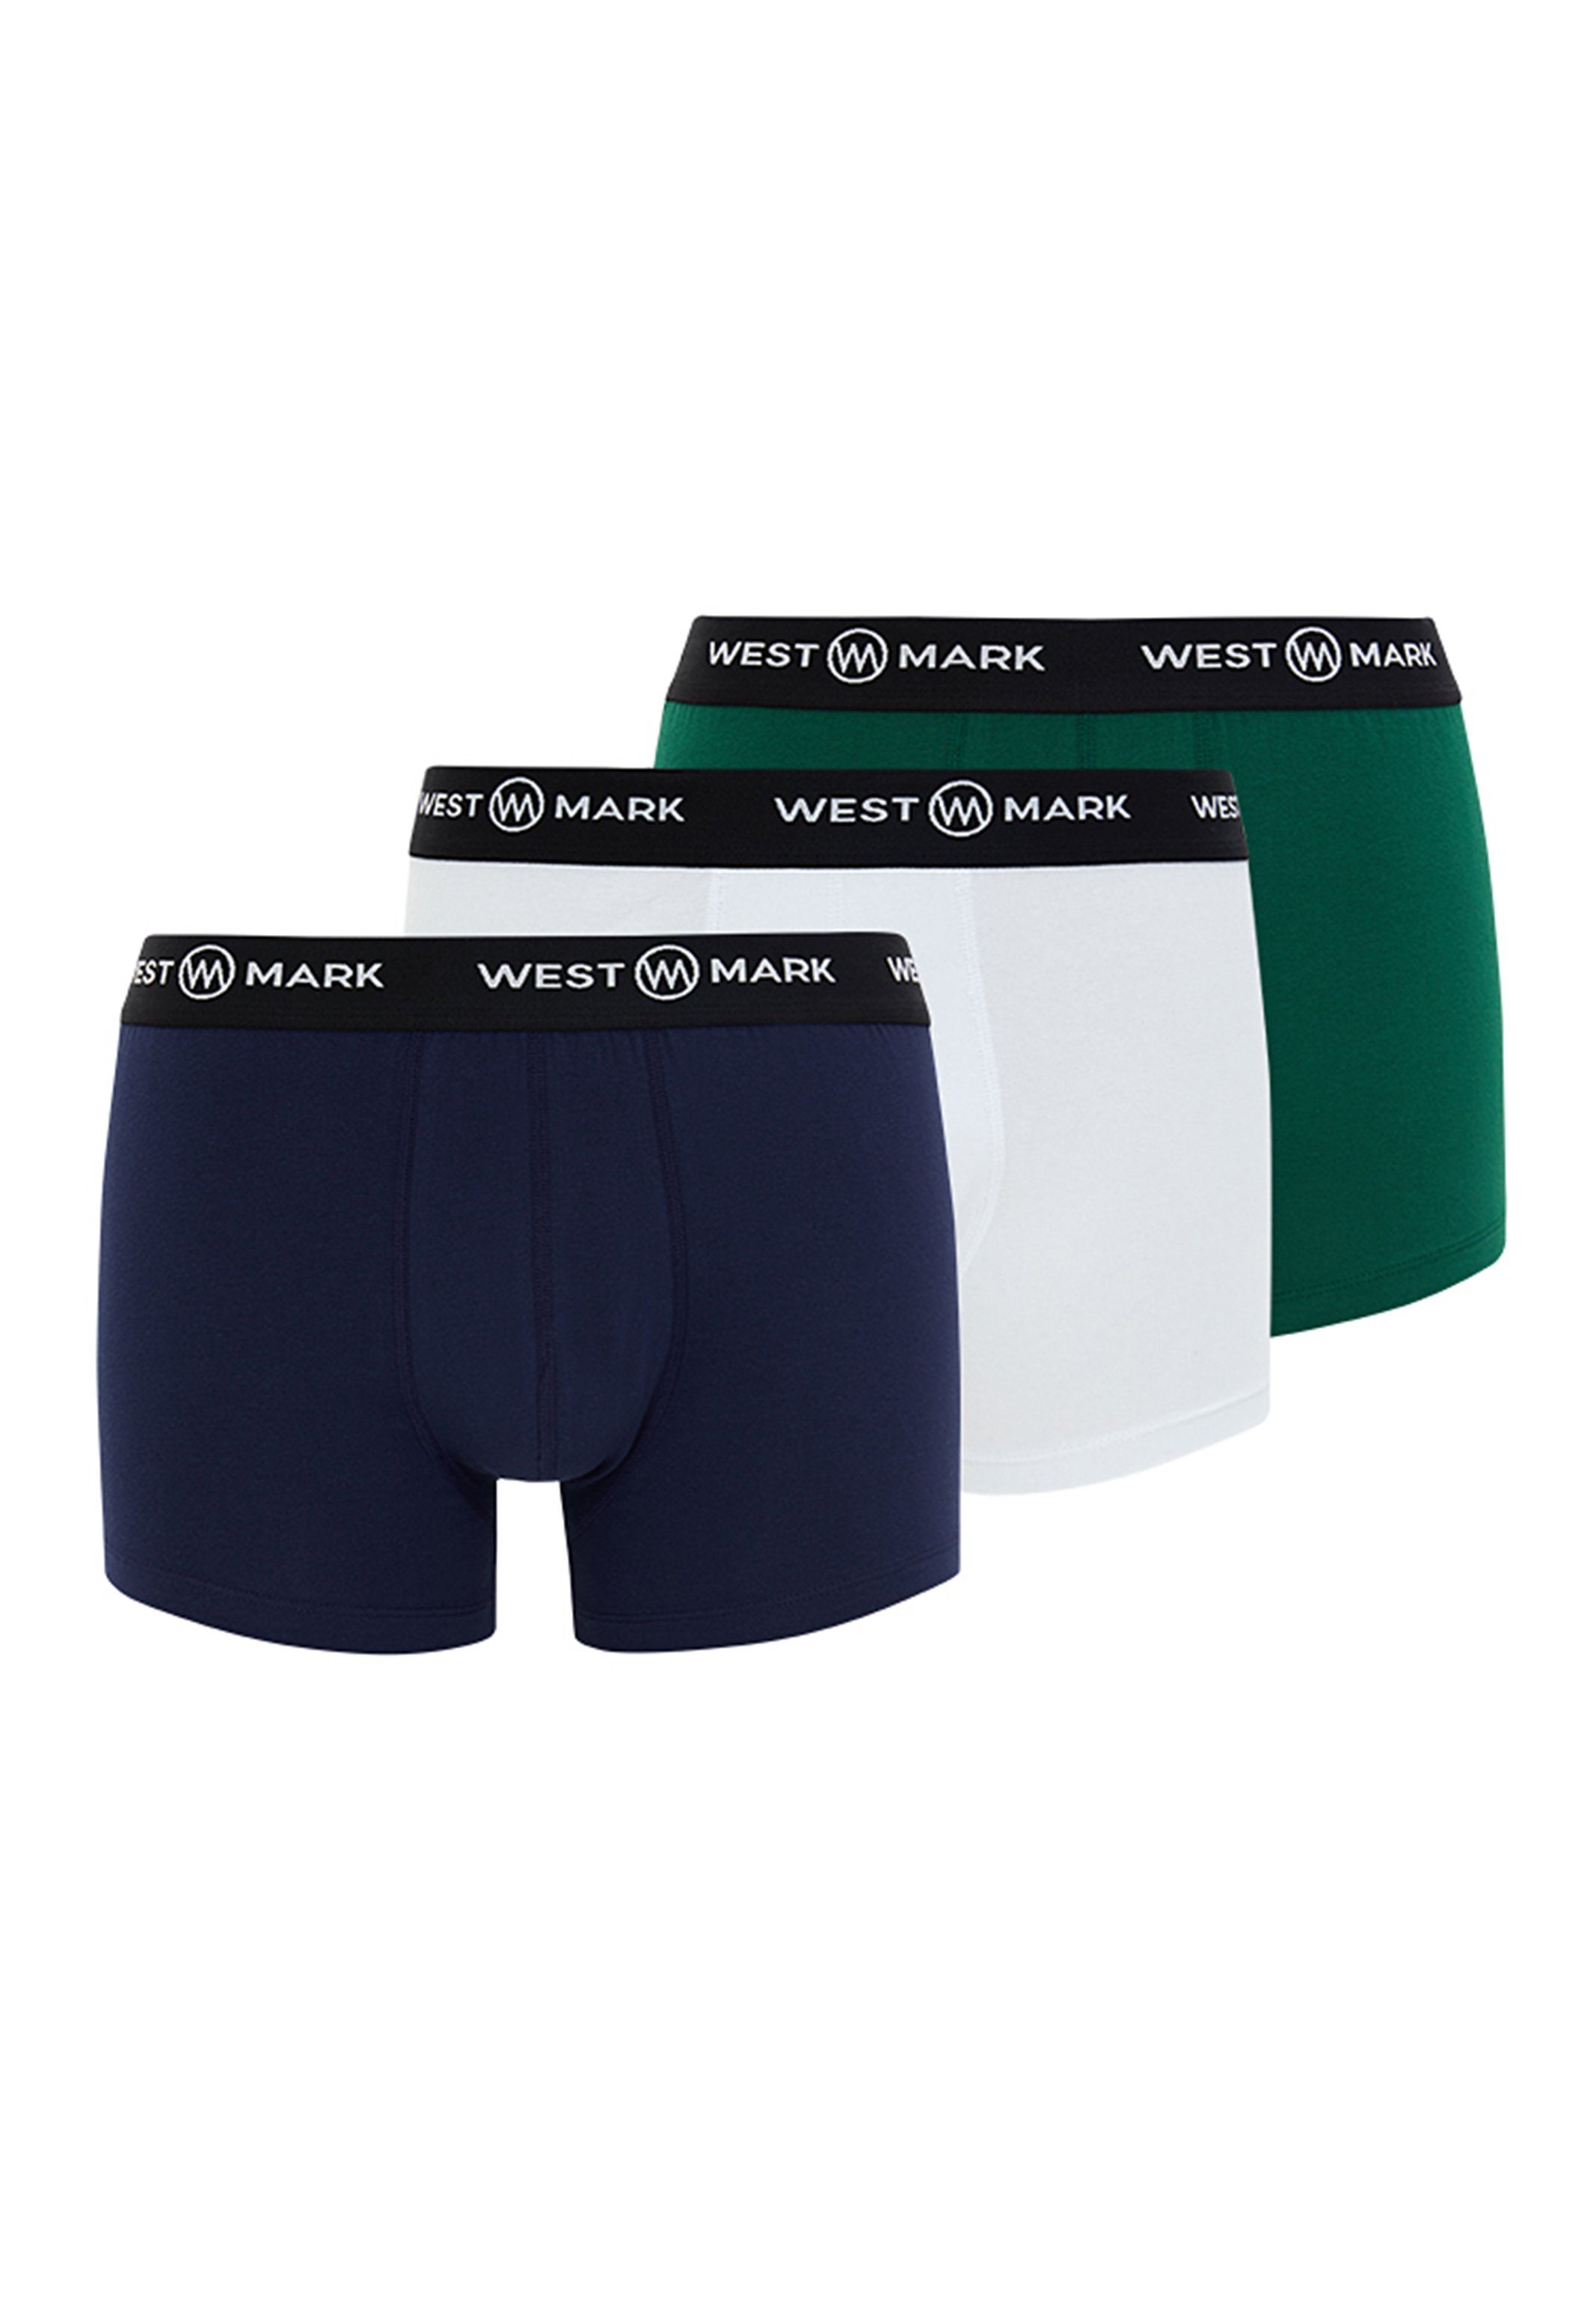 Eingriff - / Ohne / Retro Green / Pack Boxer 3er - Baumwolle LONDON 3-St) WESTMARK Retro Pant (Spar-Set, White - Navy Short Oscar